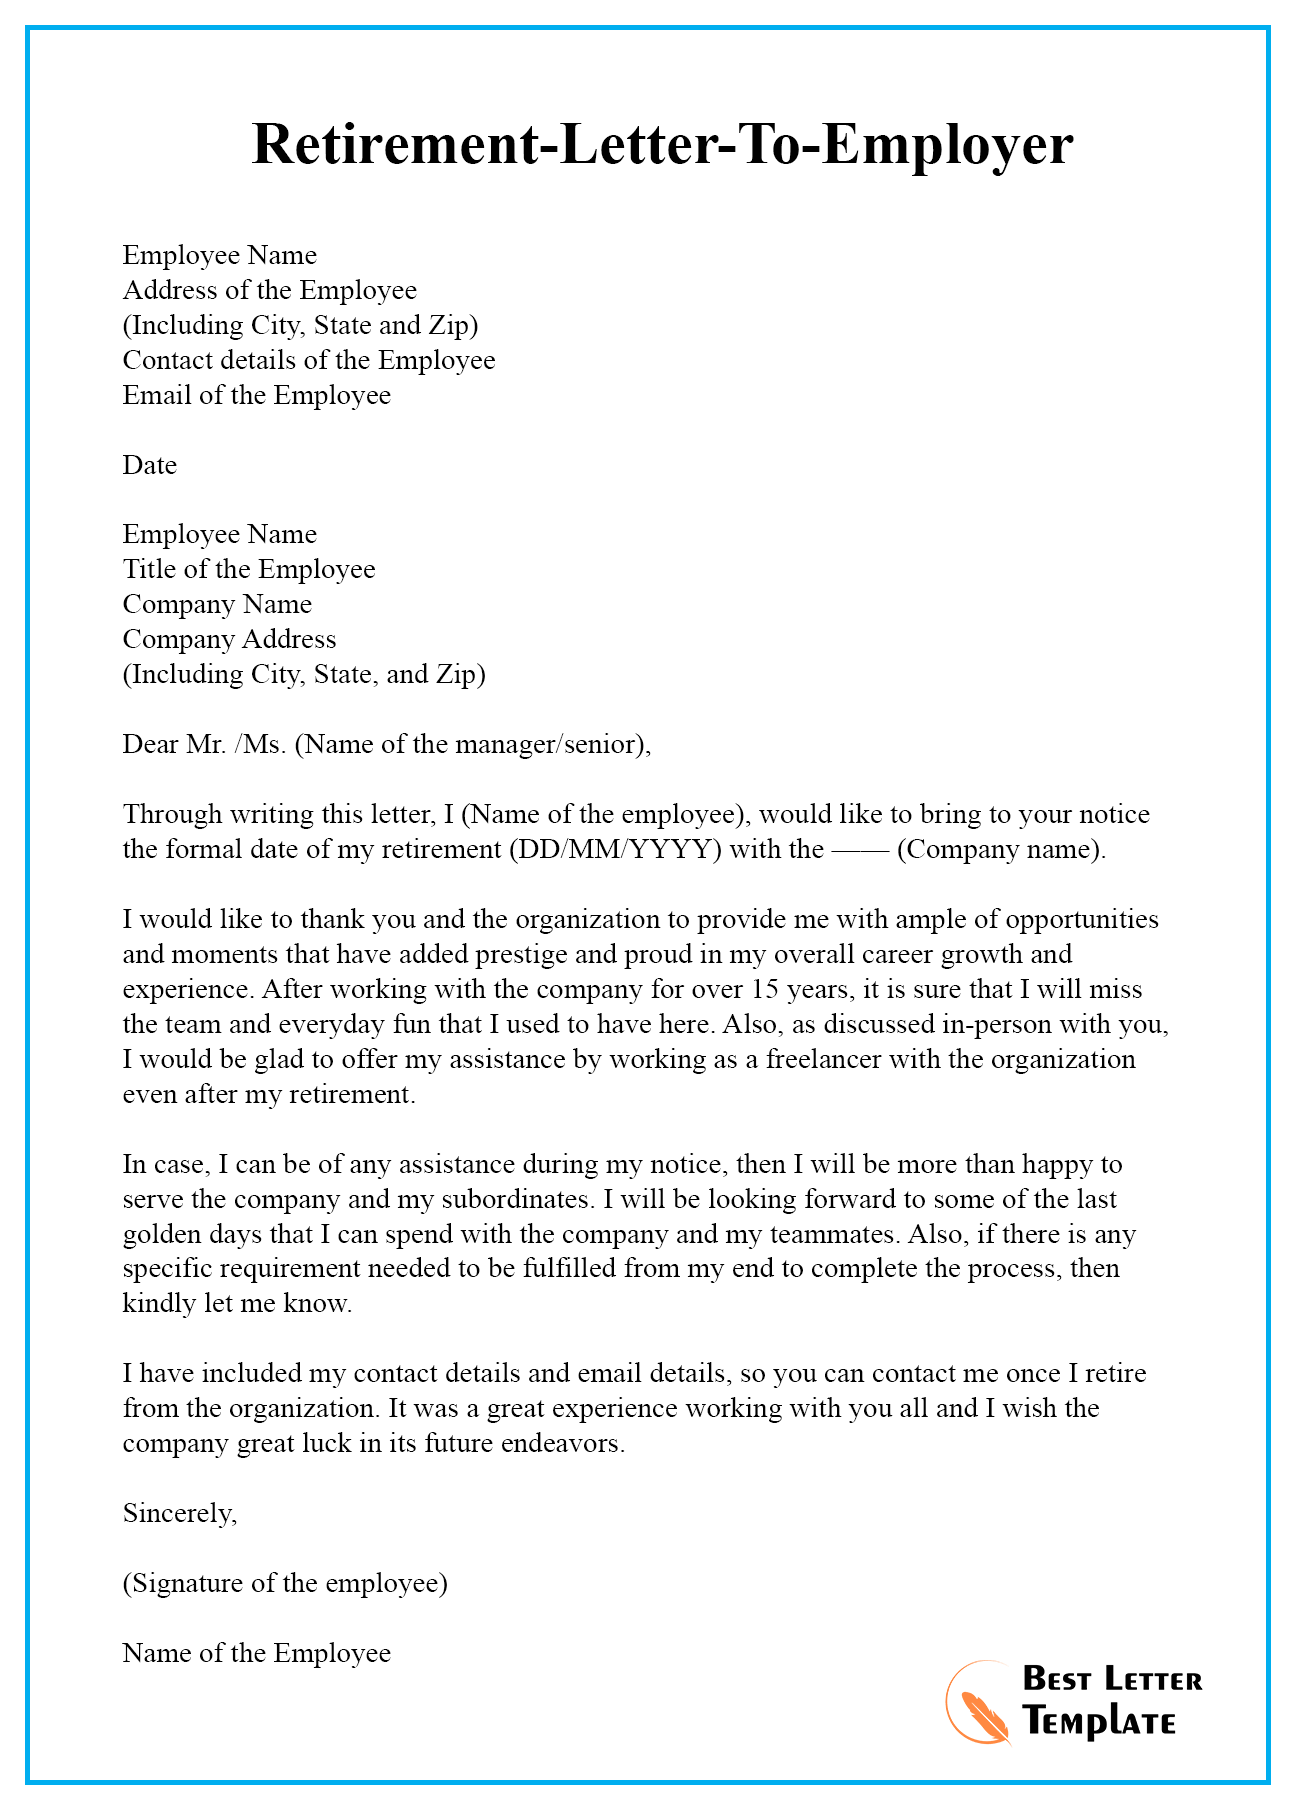 Retirement Letter To Employee from bestlettertemplate.com